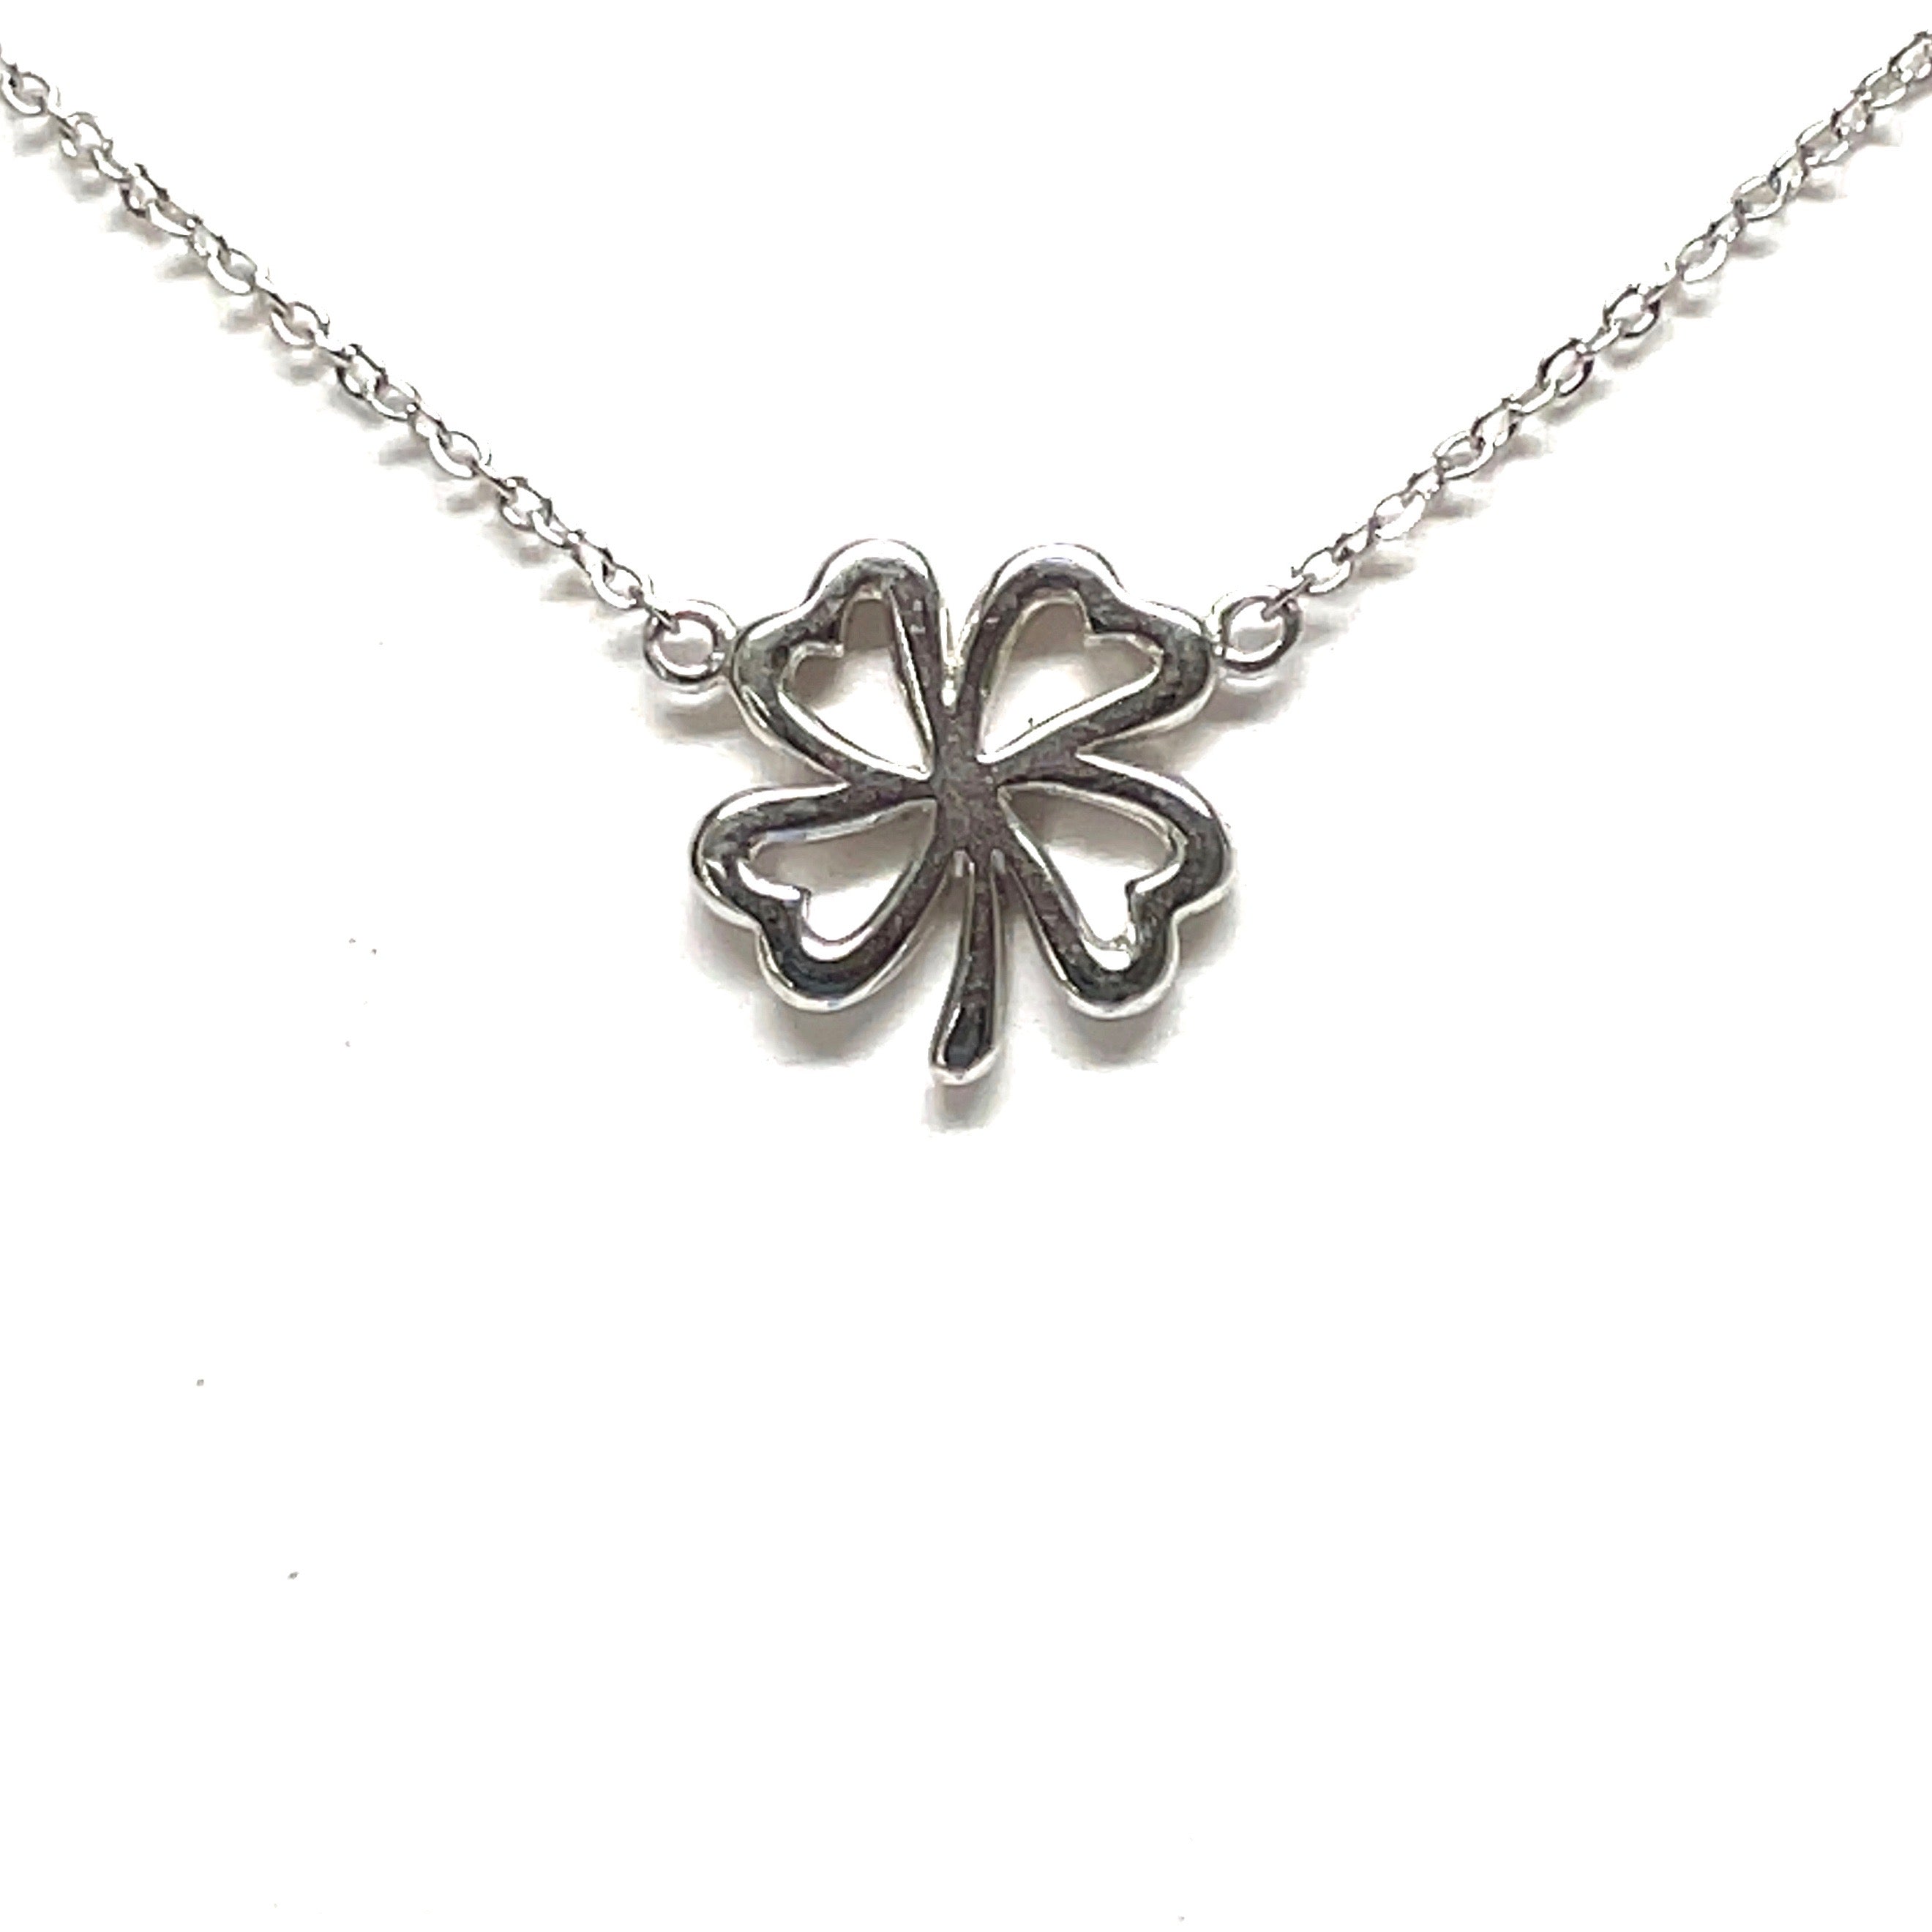 Sterling silver four leaf clover necklace